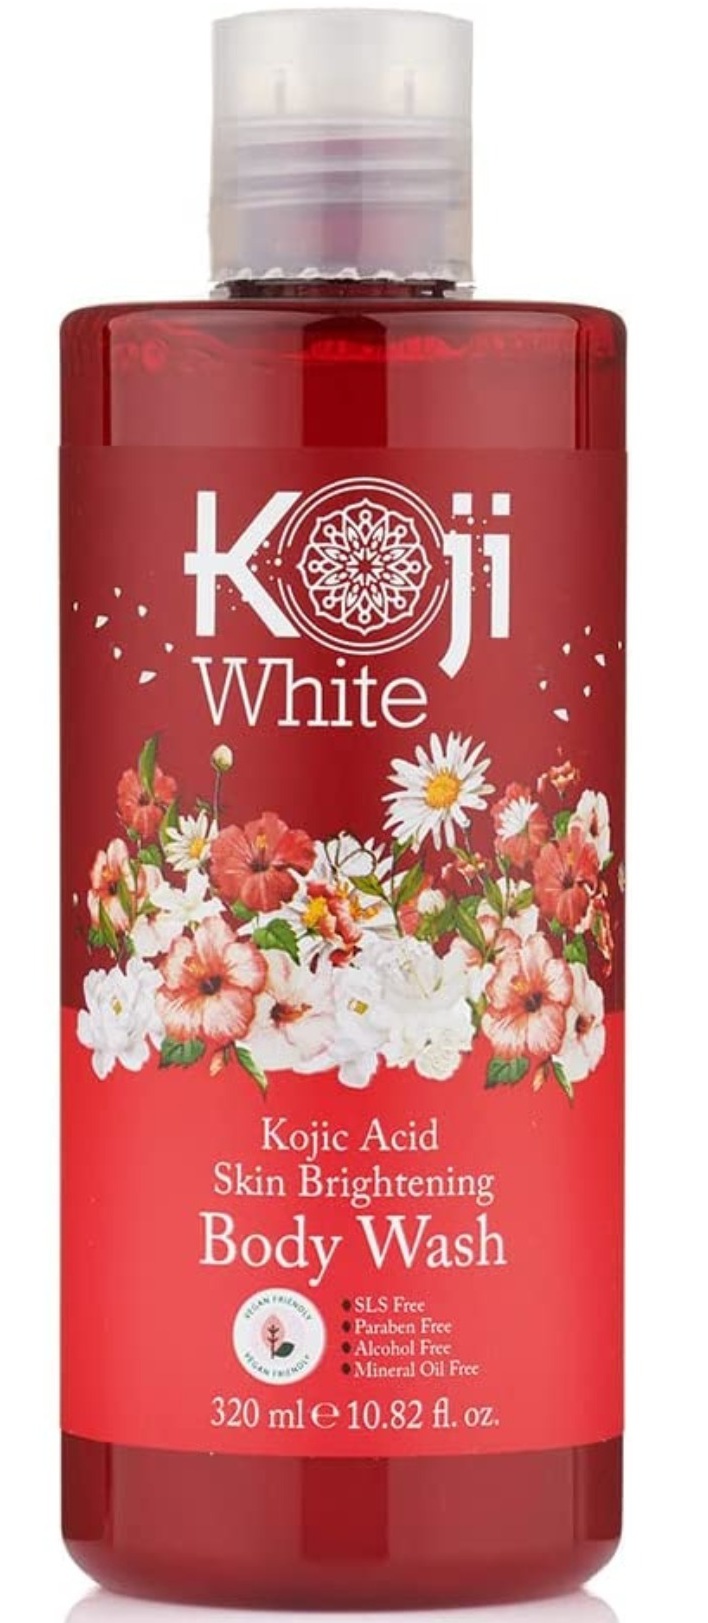 Koji White Kojic Acid Skin Brightening Body Wash